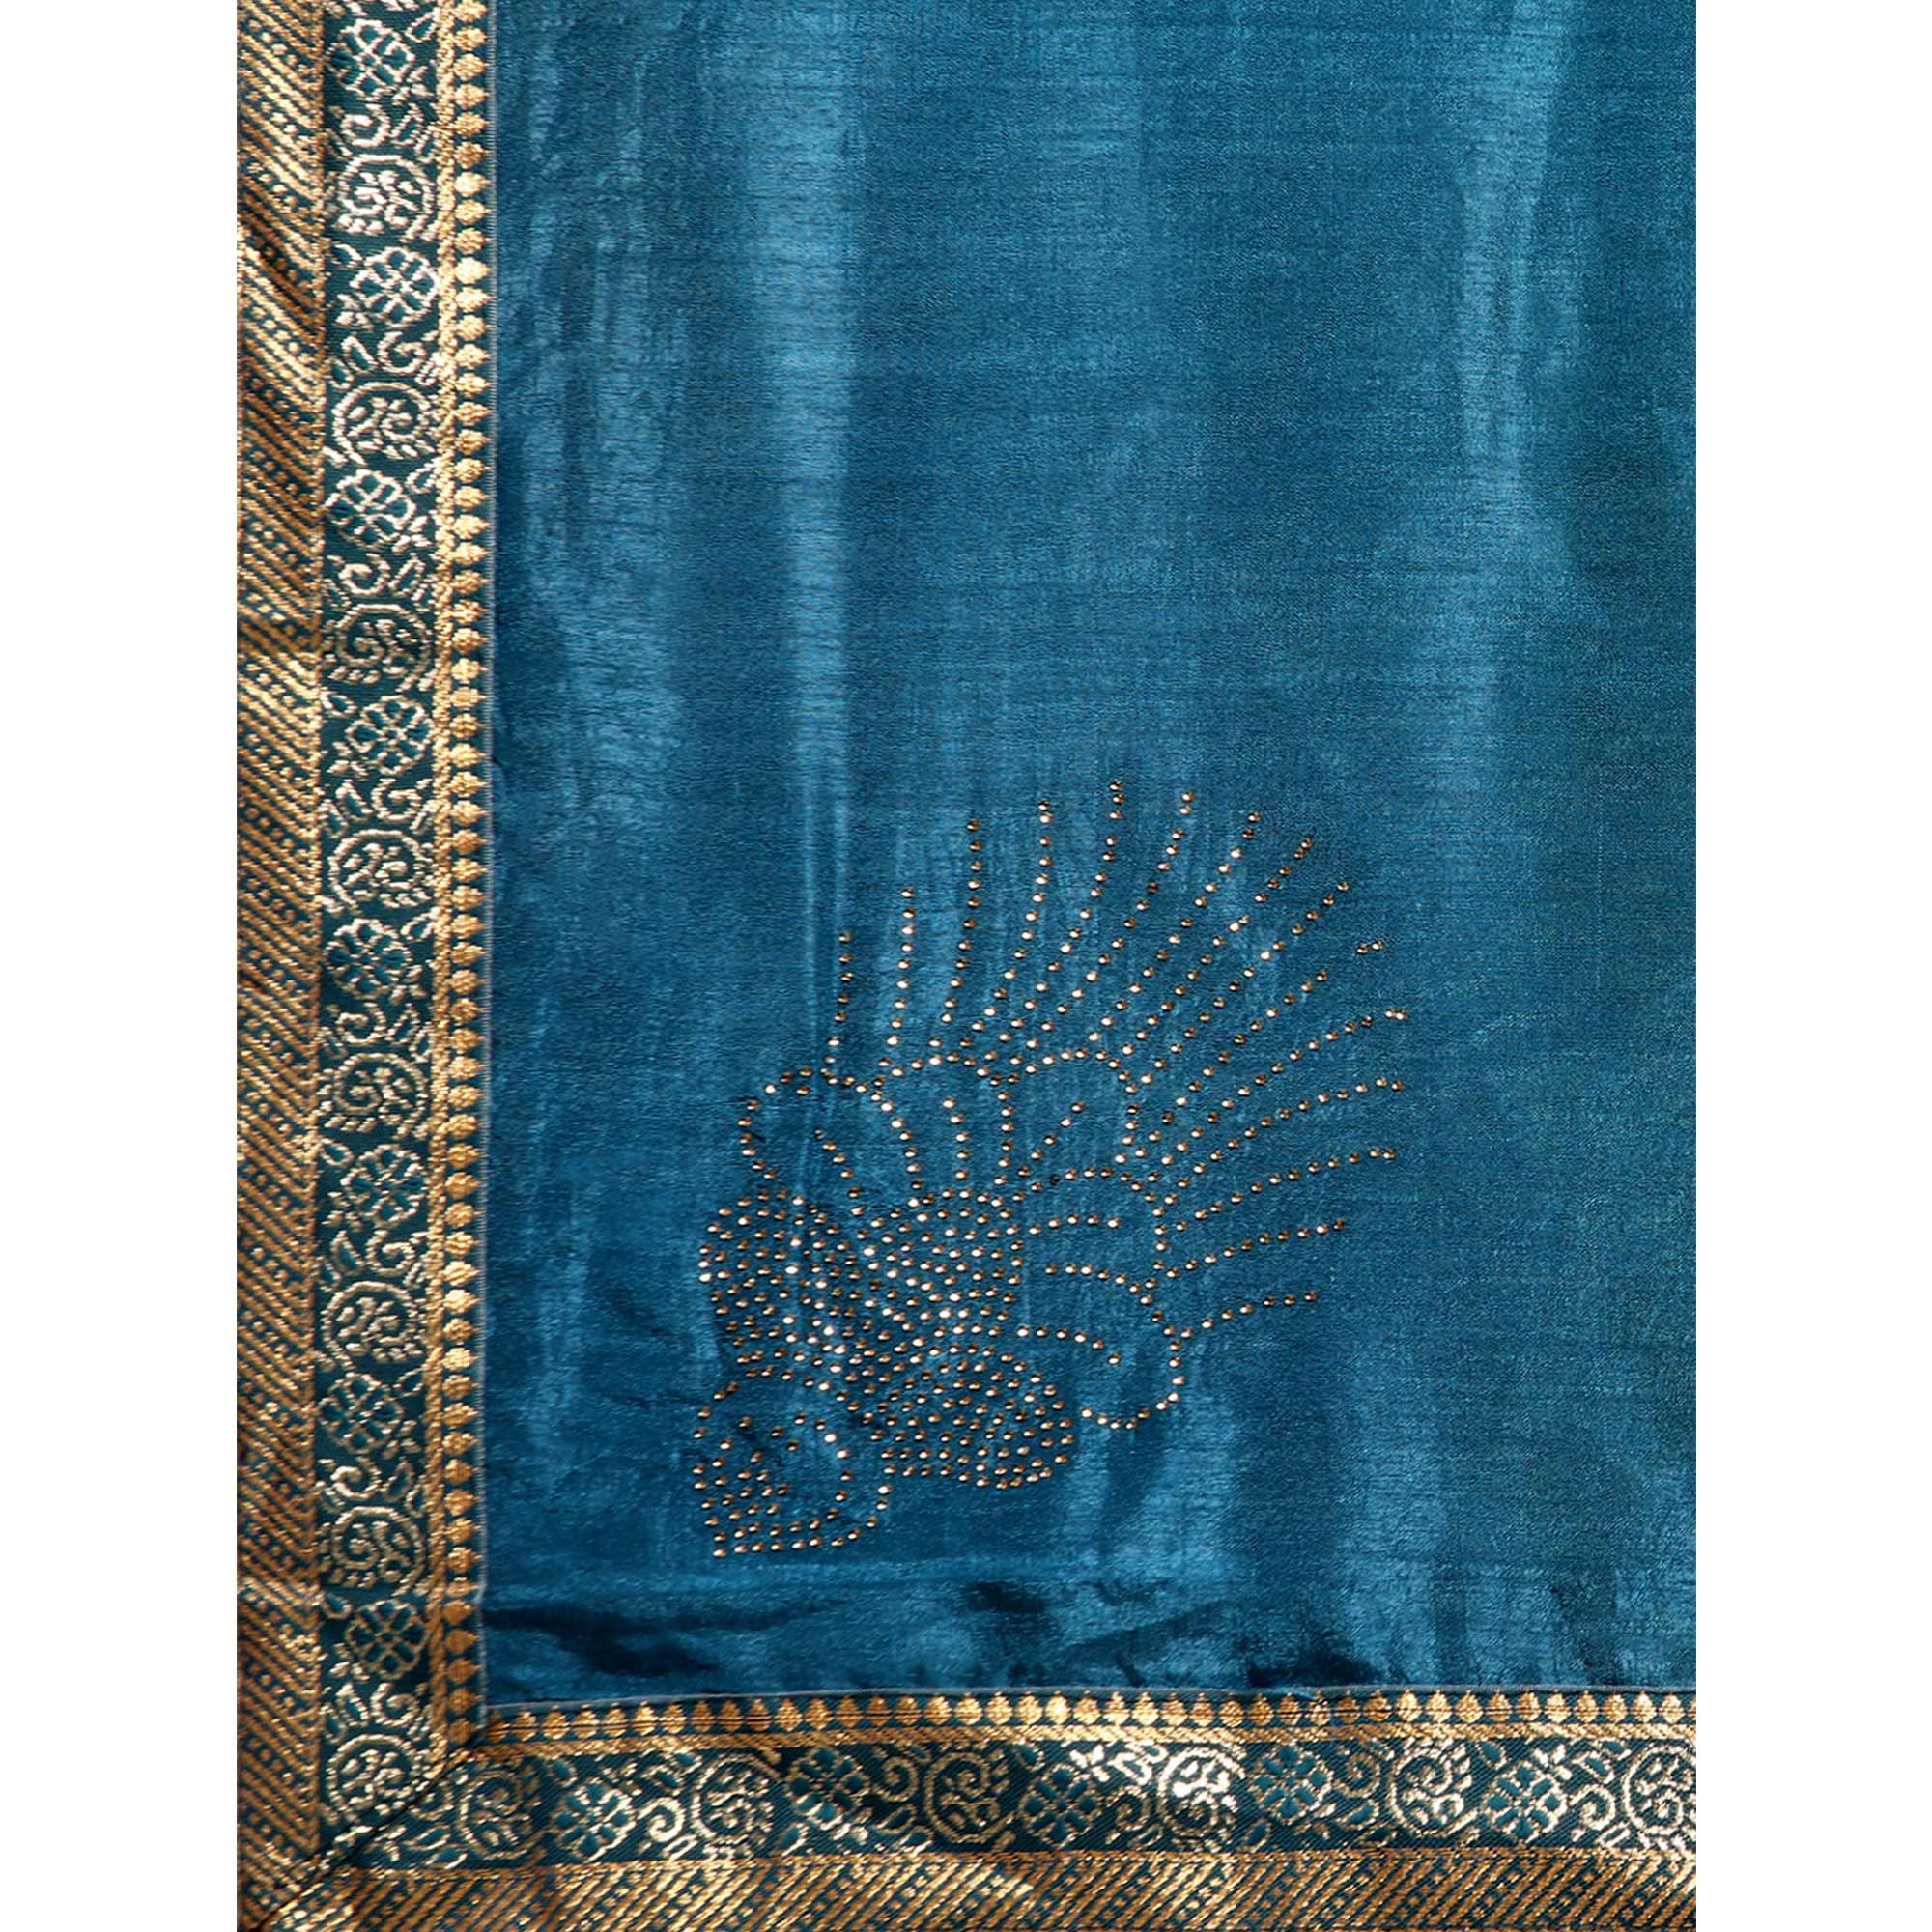 Blue Swarovski Work Vichitra Silk Saree With Fancy Border